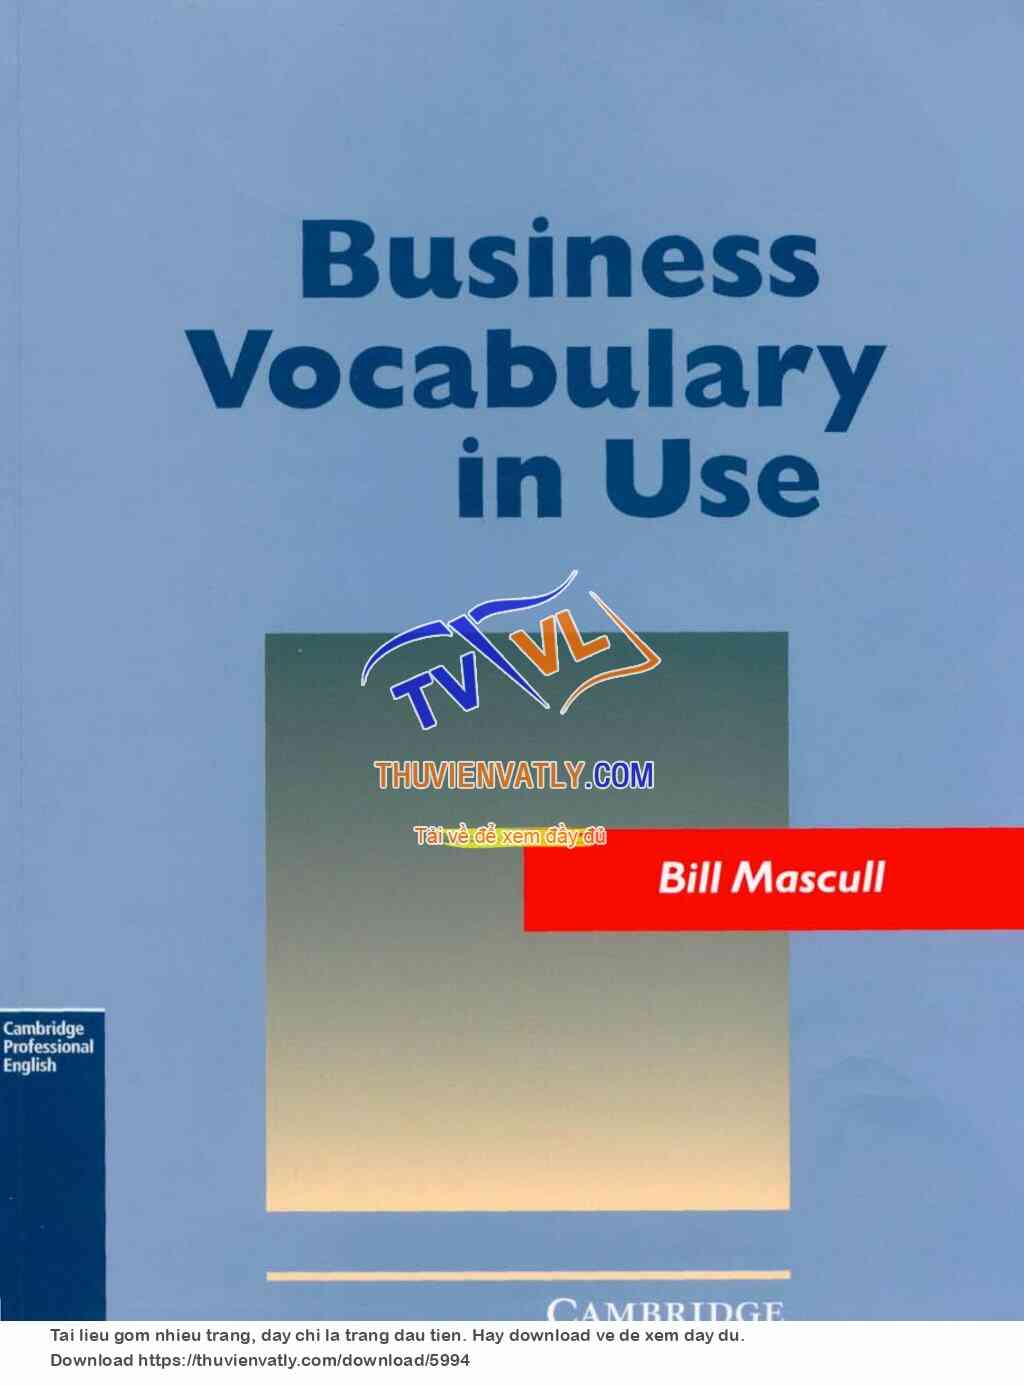 Bill Mascull - Cambridge Business Vocabulary in Use